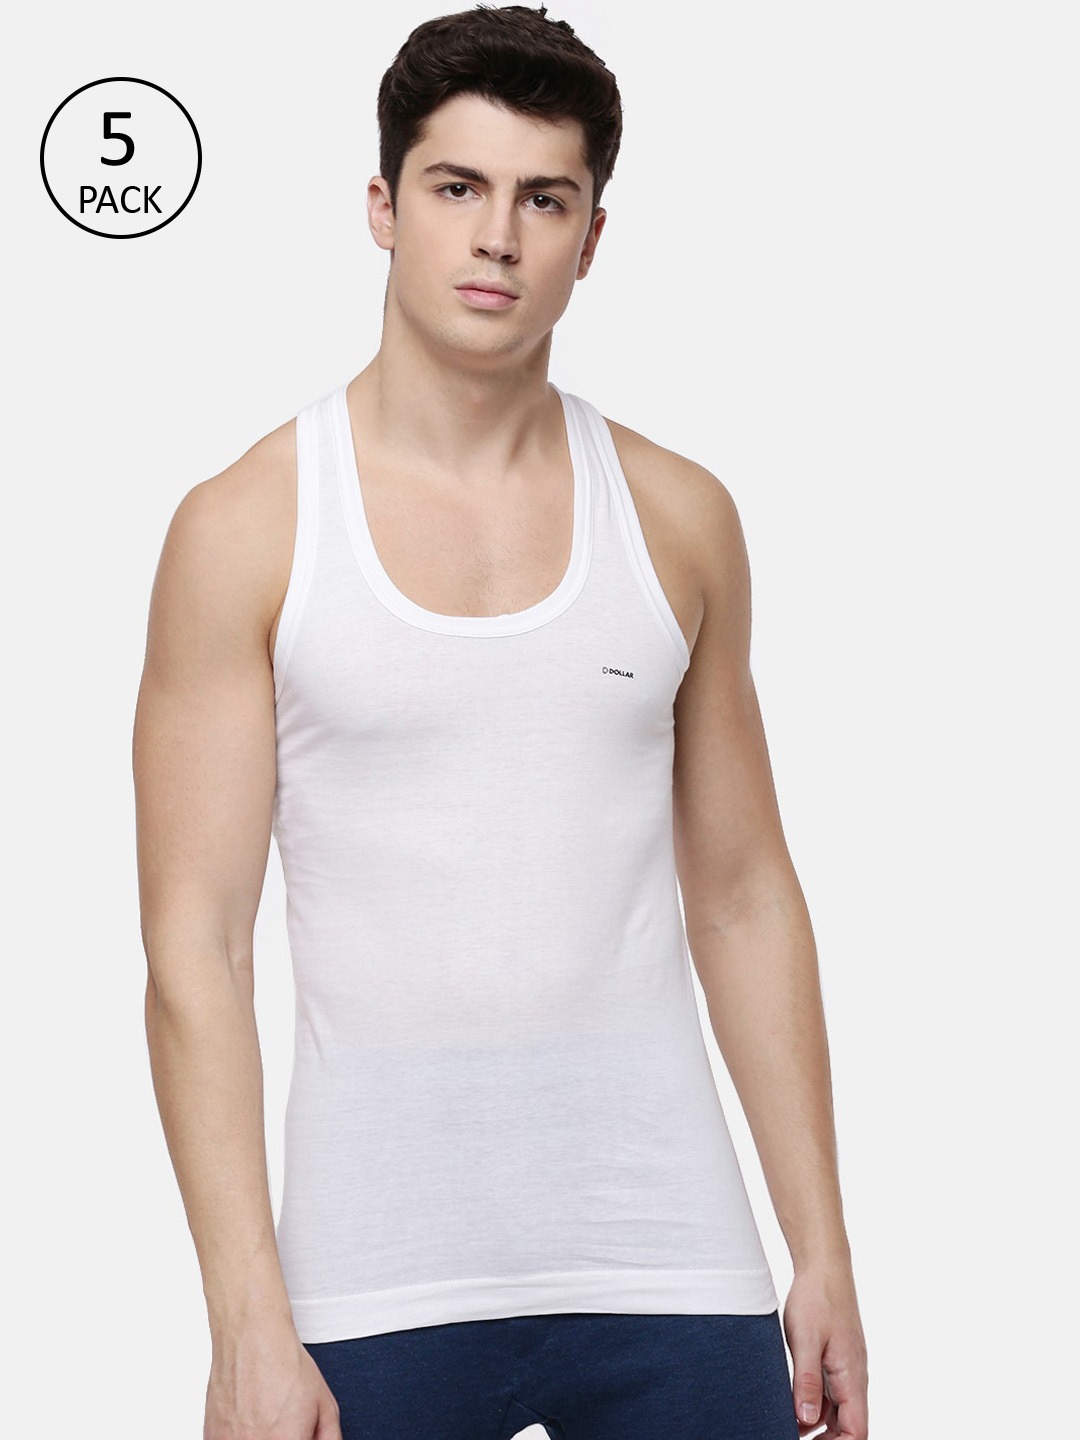 Clothing Innerwear Vests | Dollar Lehar Men Pack of 5 White Solid Innerwear Vests MLHVE-01-PO5 - SI91755